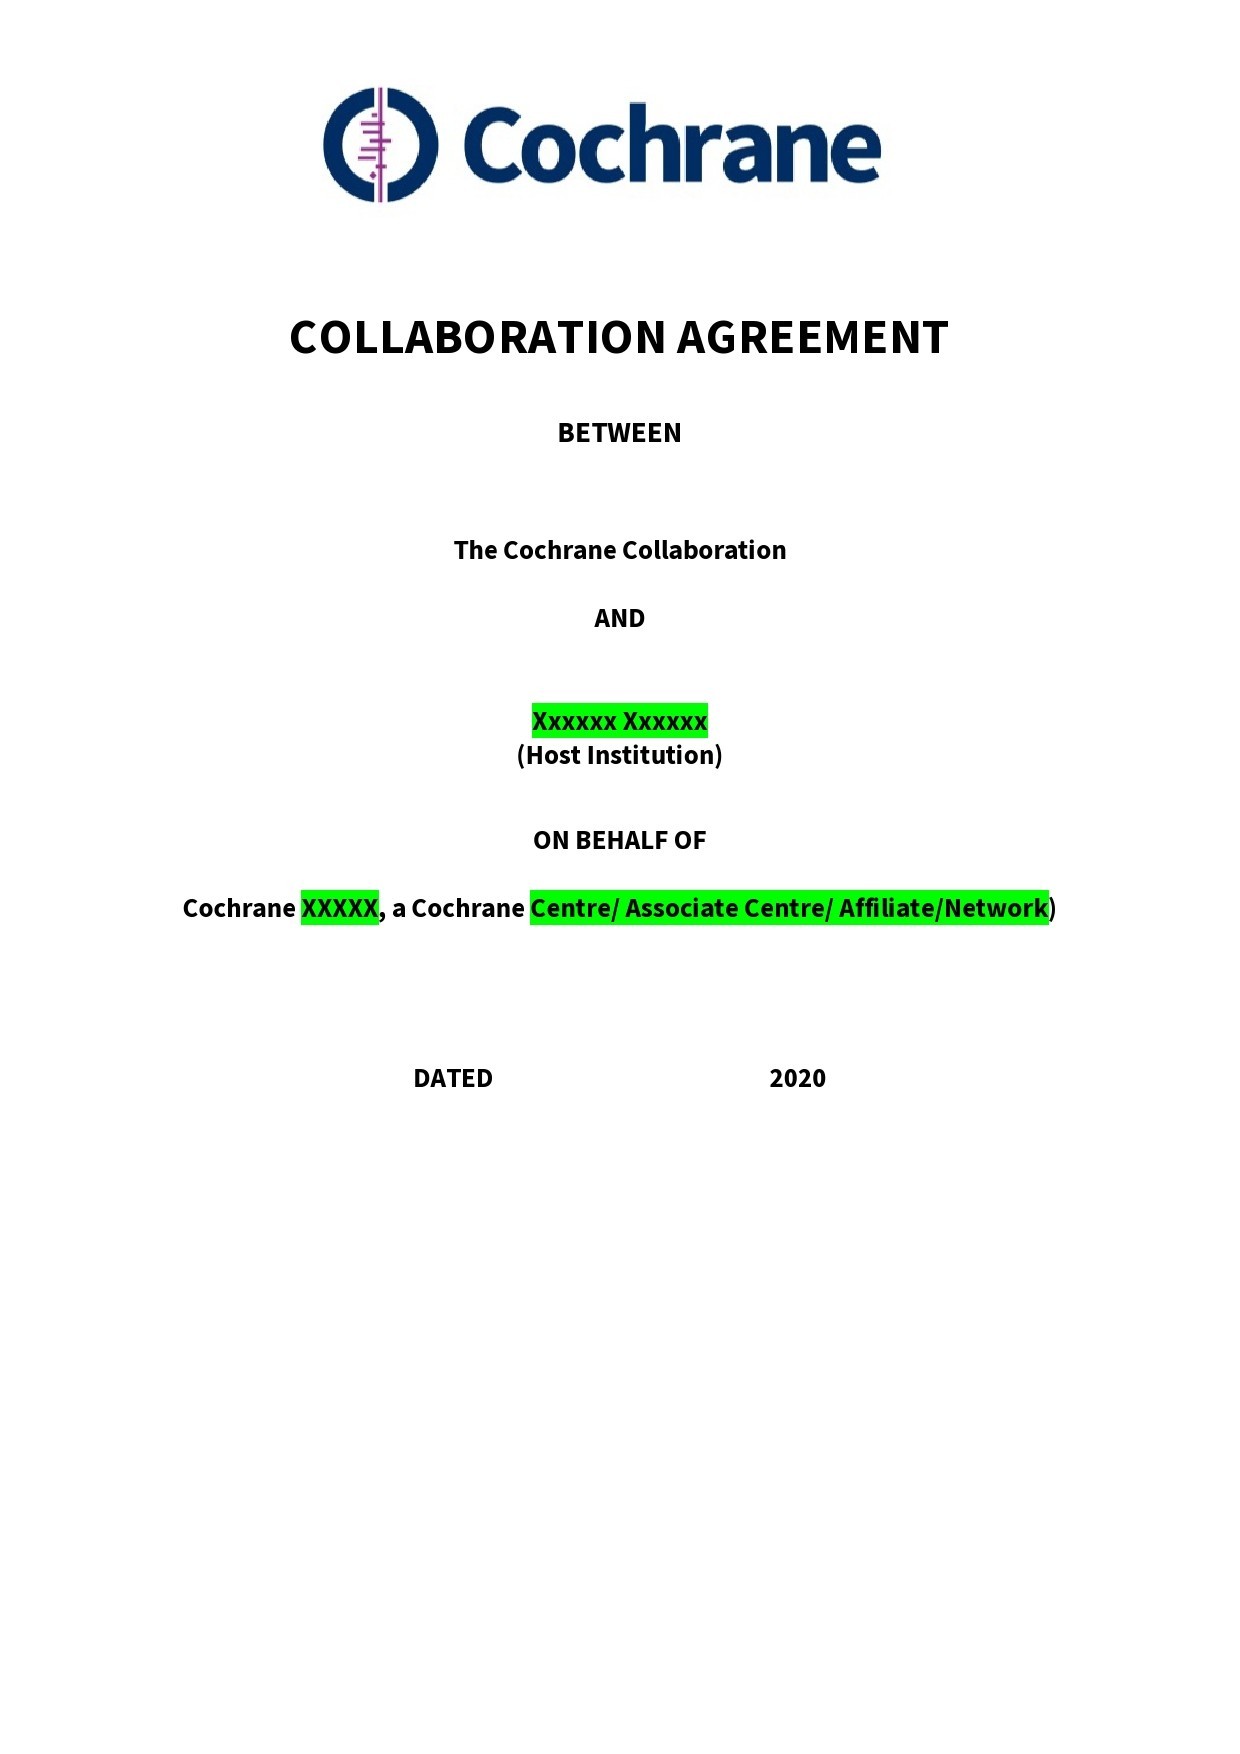 Free collaboration agreement 08